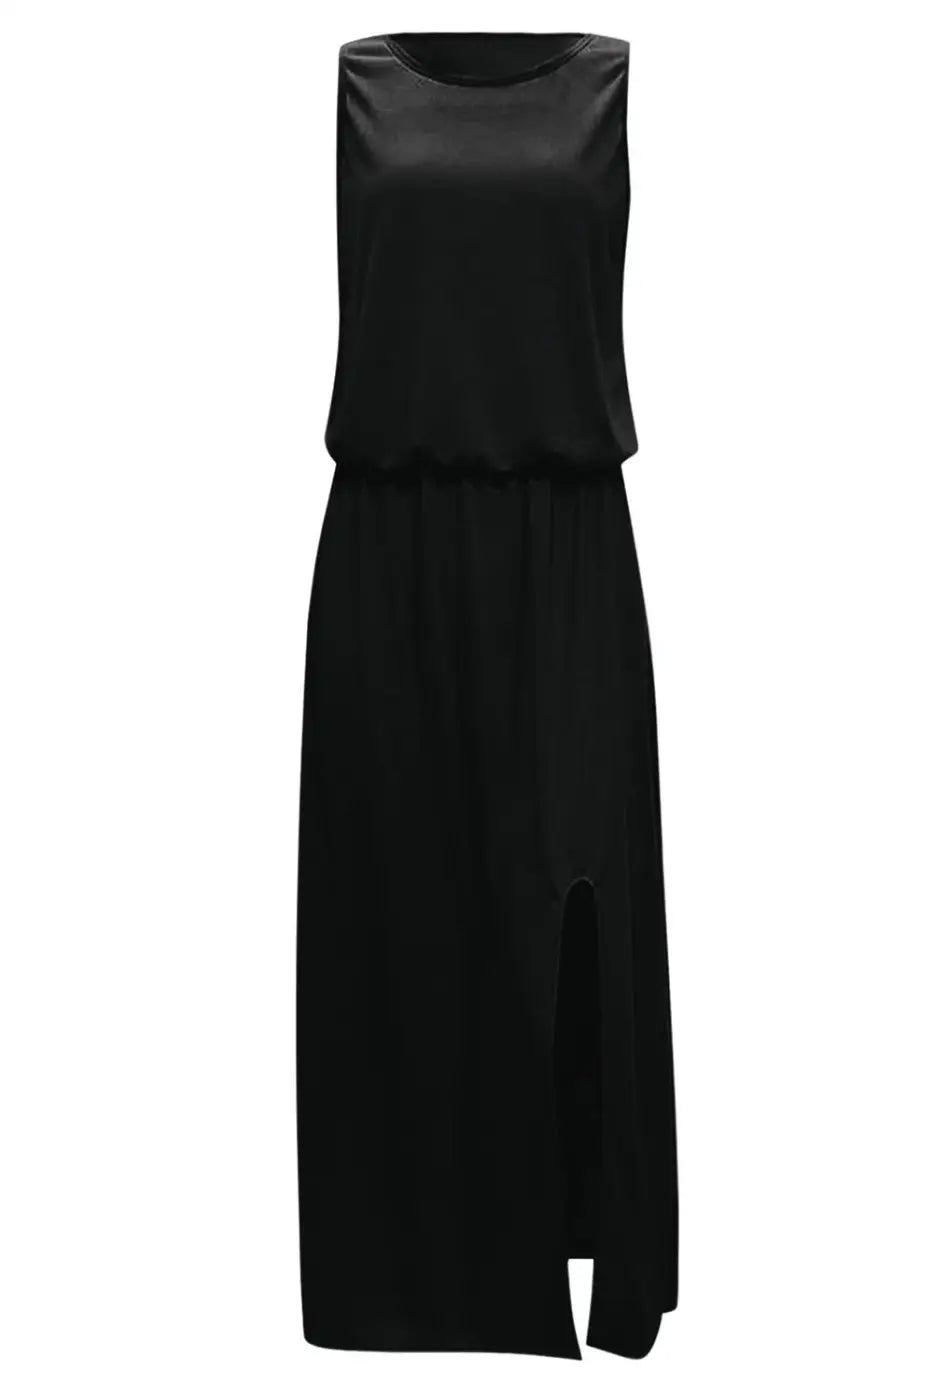 Tunic maxi dress - black solid sleeveless split - dresses